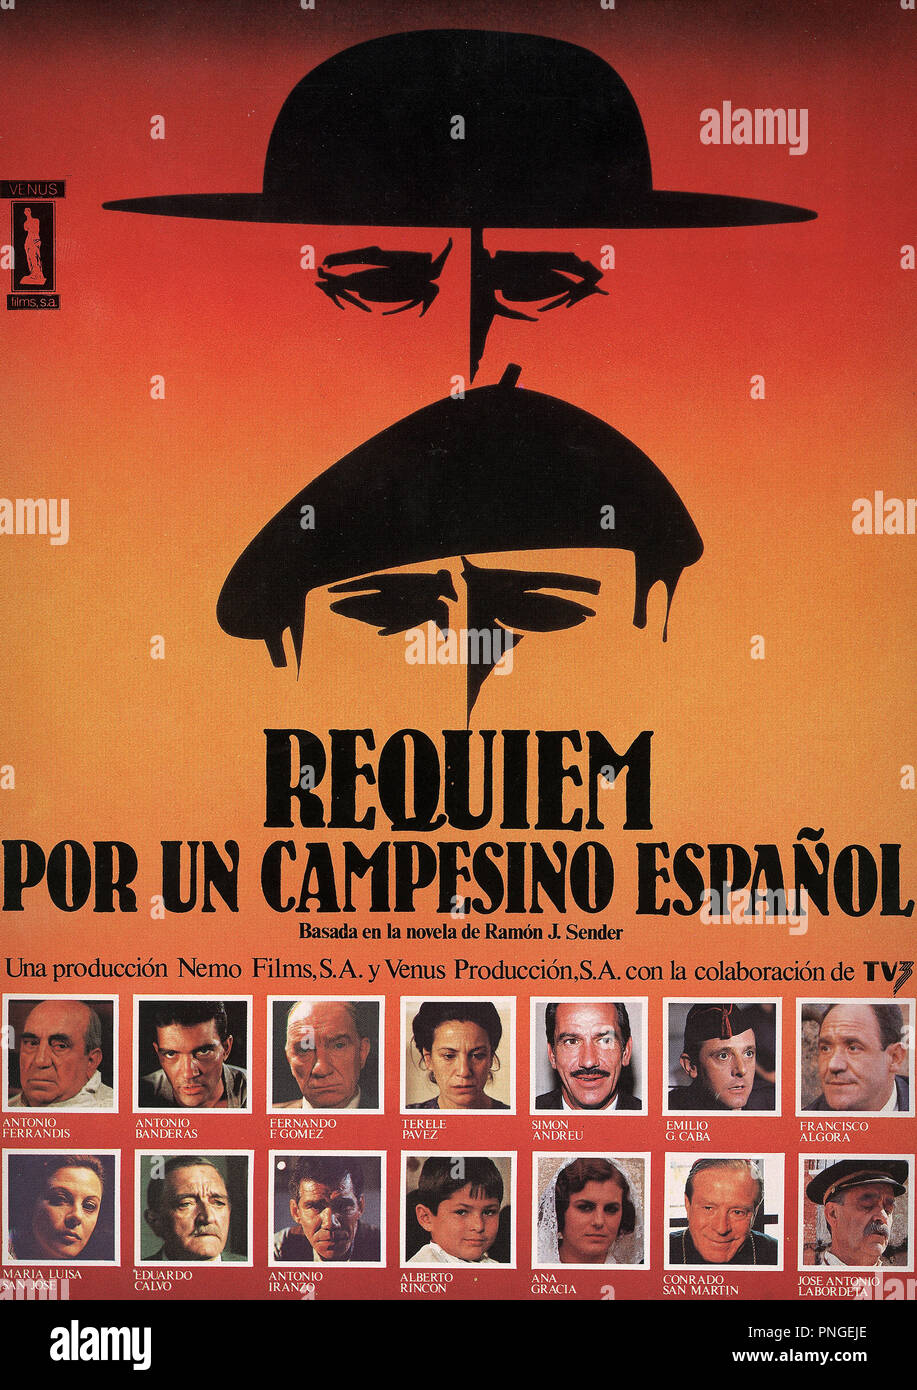 Original film title: REQUIEM POR UN CAMPESINO ESPAÑOL. English